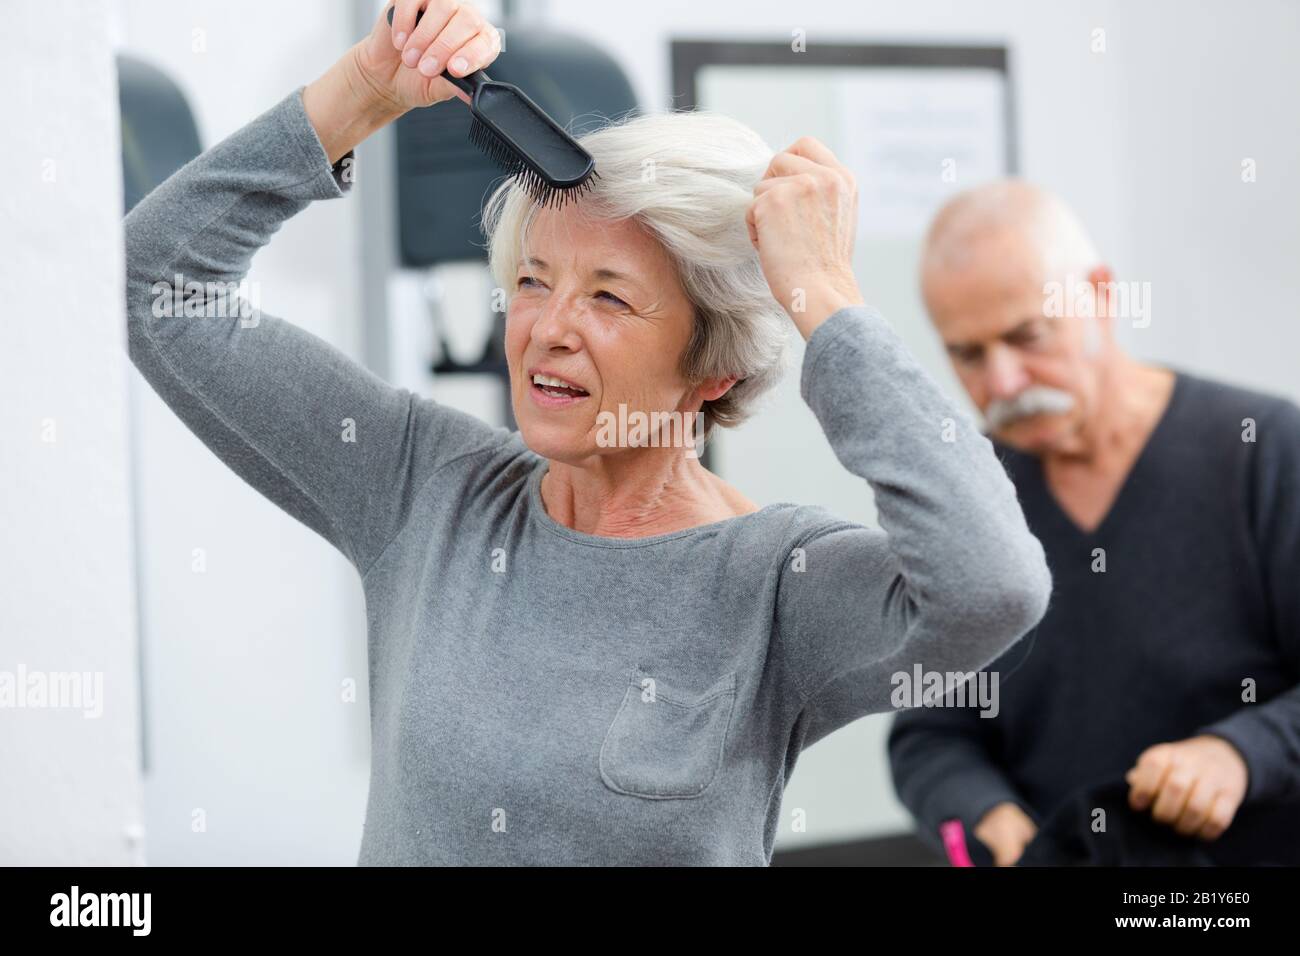 portrait of elderly woman brushing hair Stock Photo